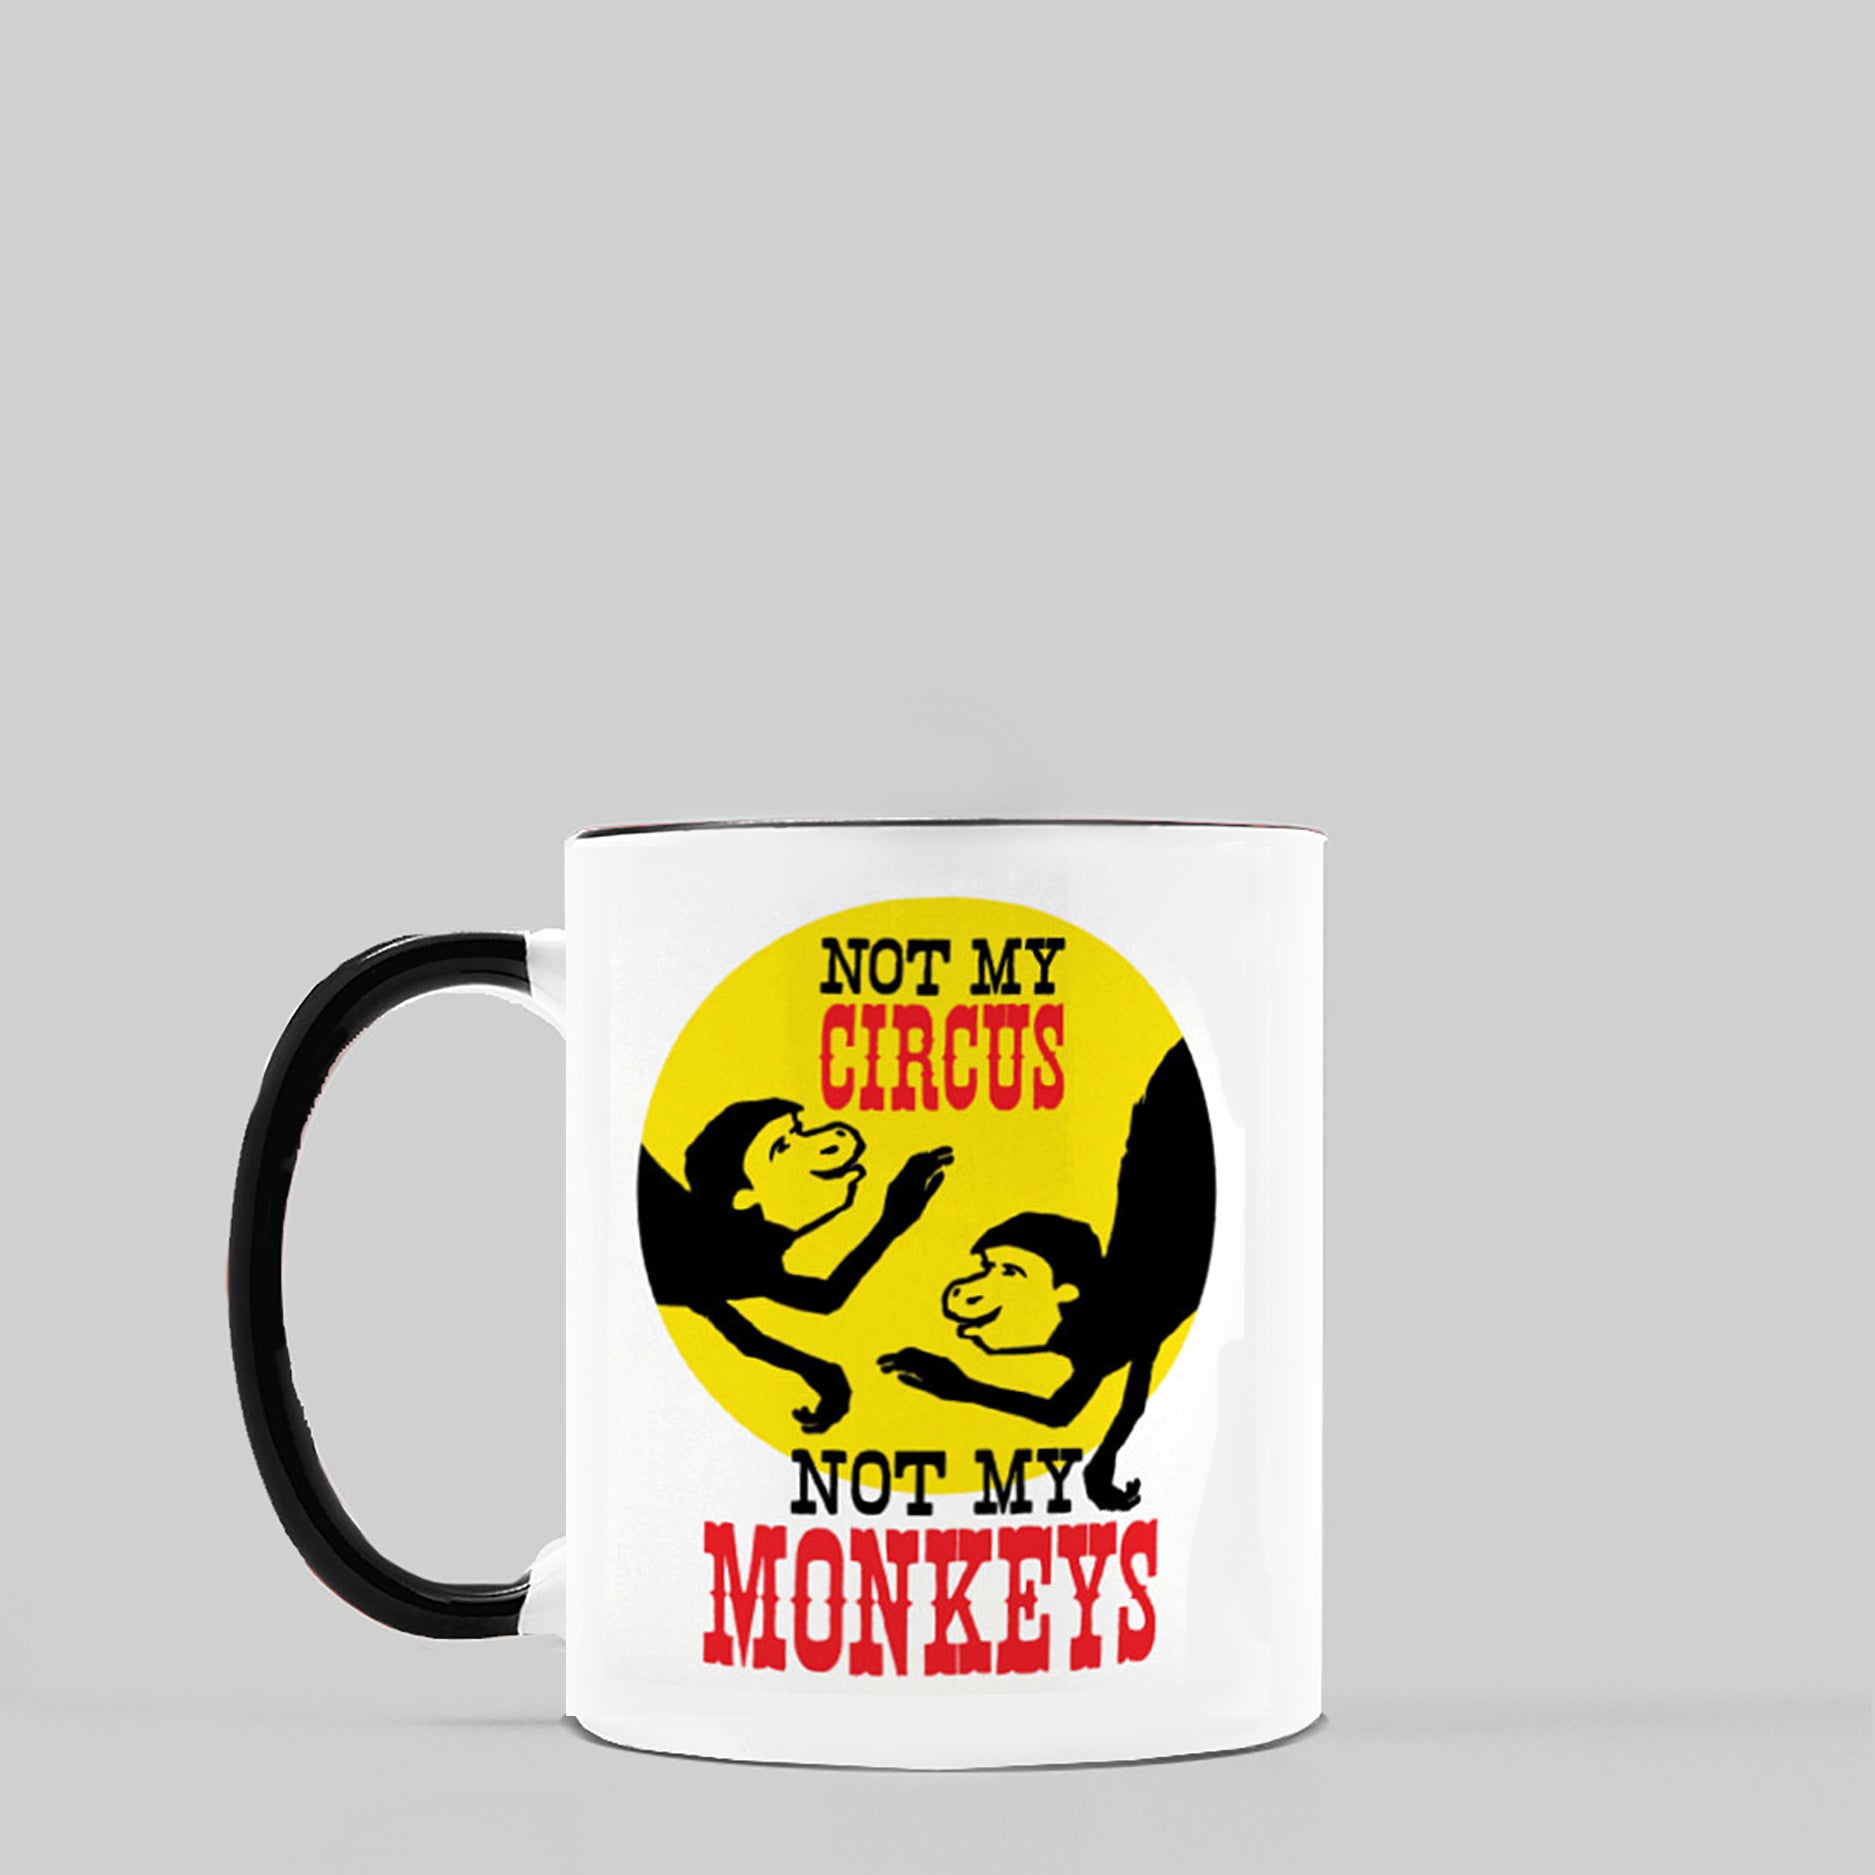 Not My Circus, Not My Monkeys Ceramic Coffee Mug, 11oz